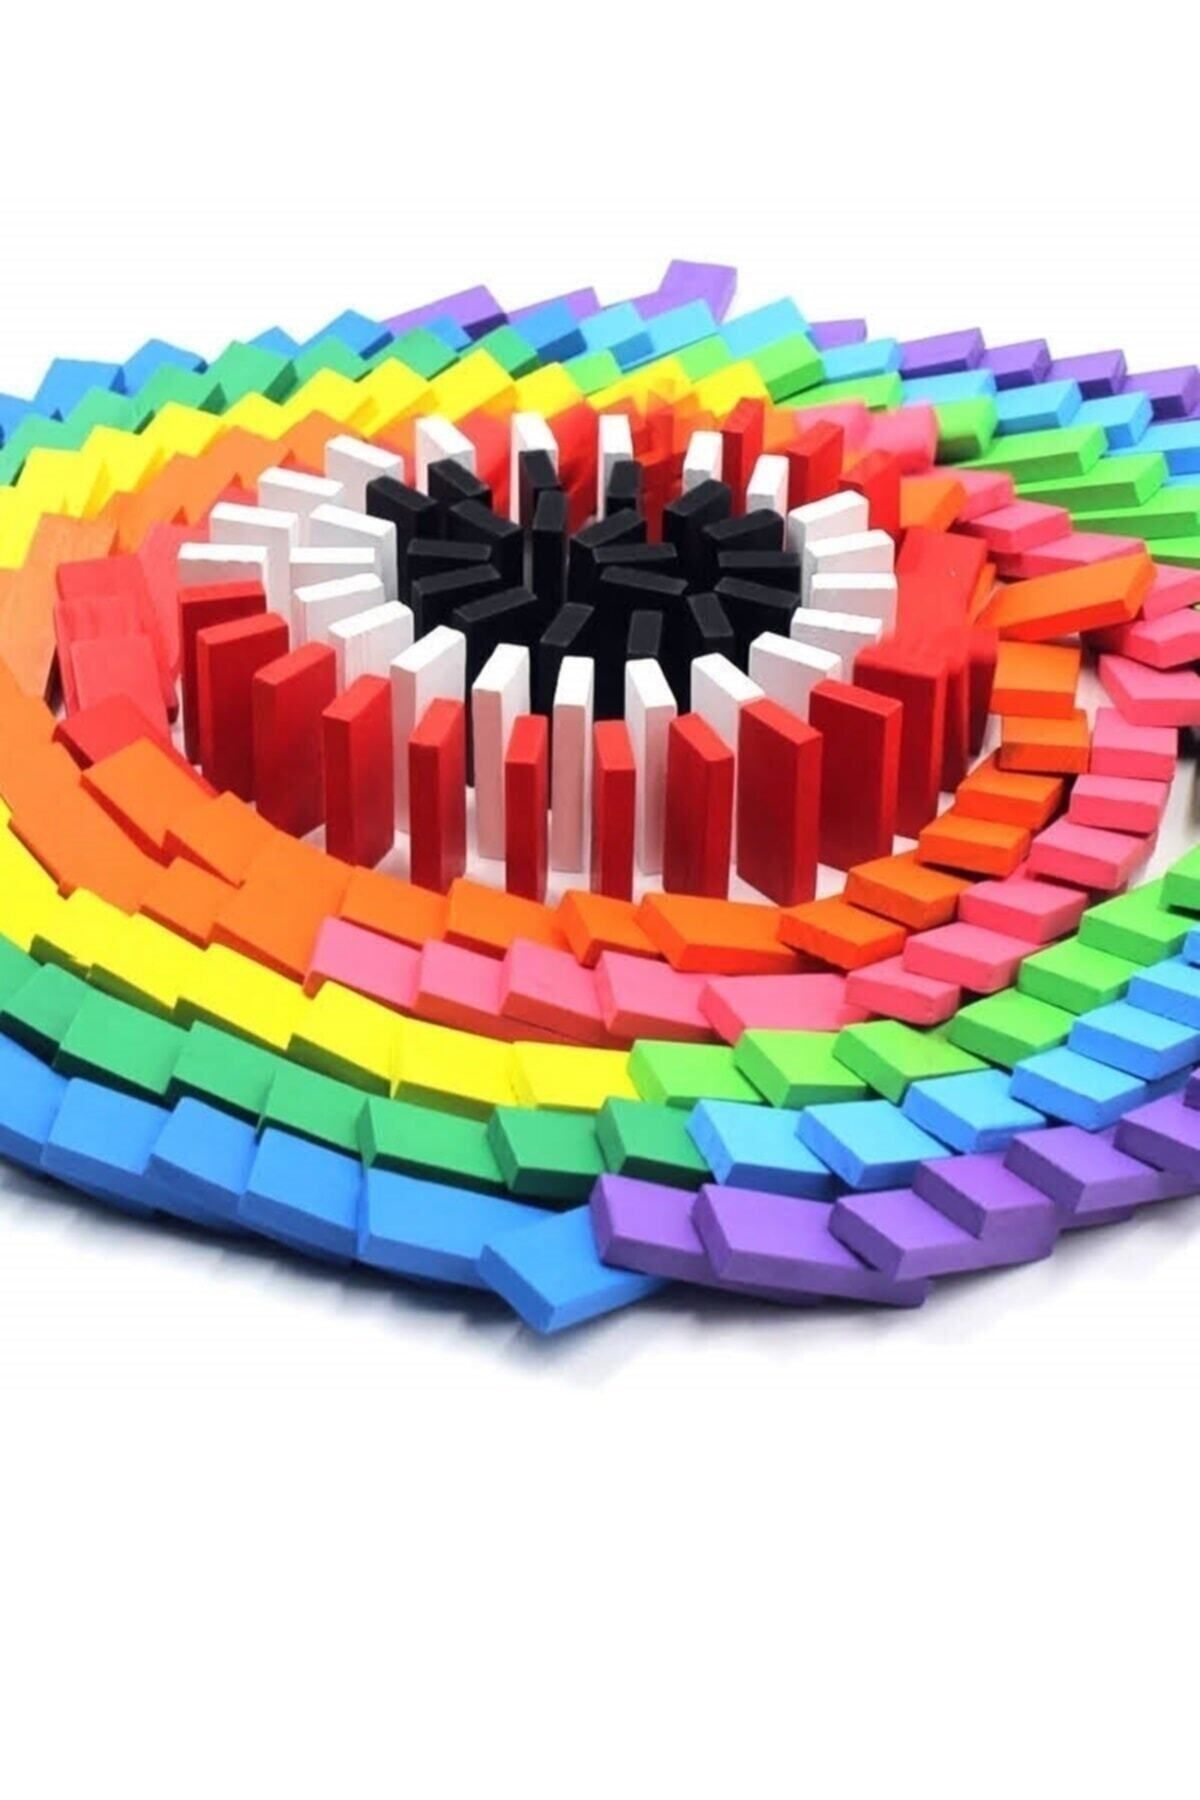 Ateş Ahşap Domino Taşları 100 Parça Renkli Eğitici Domino